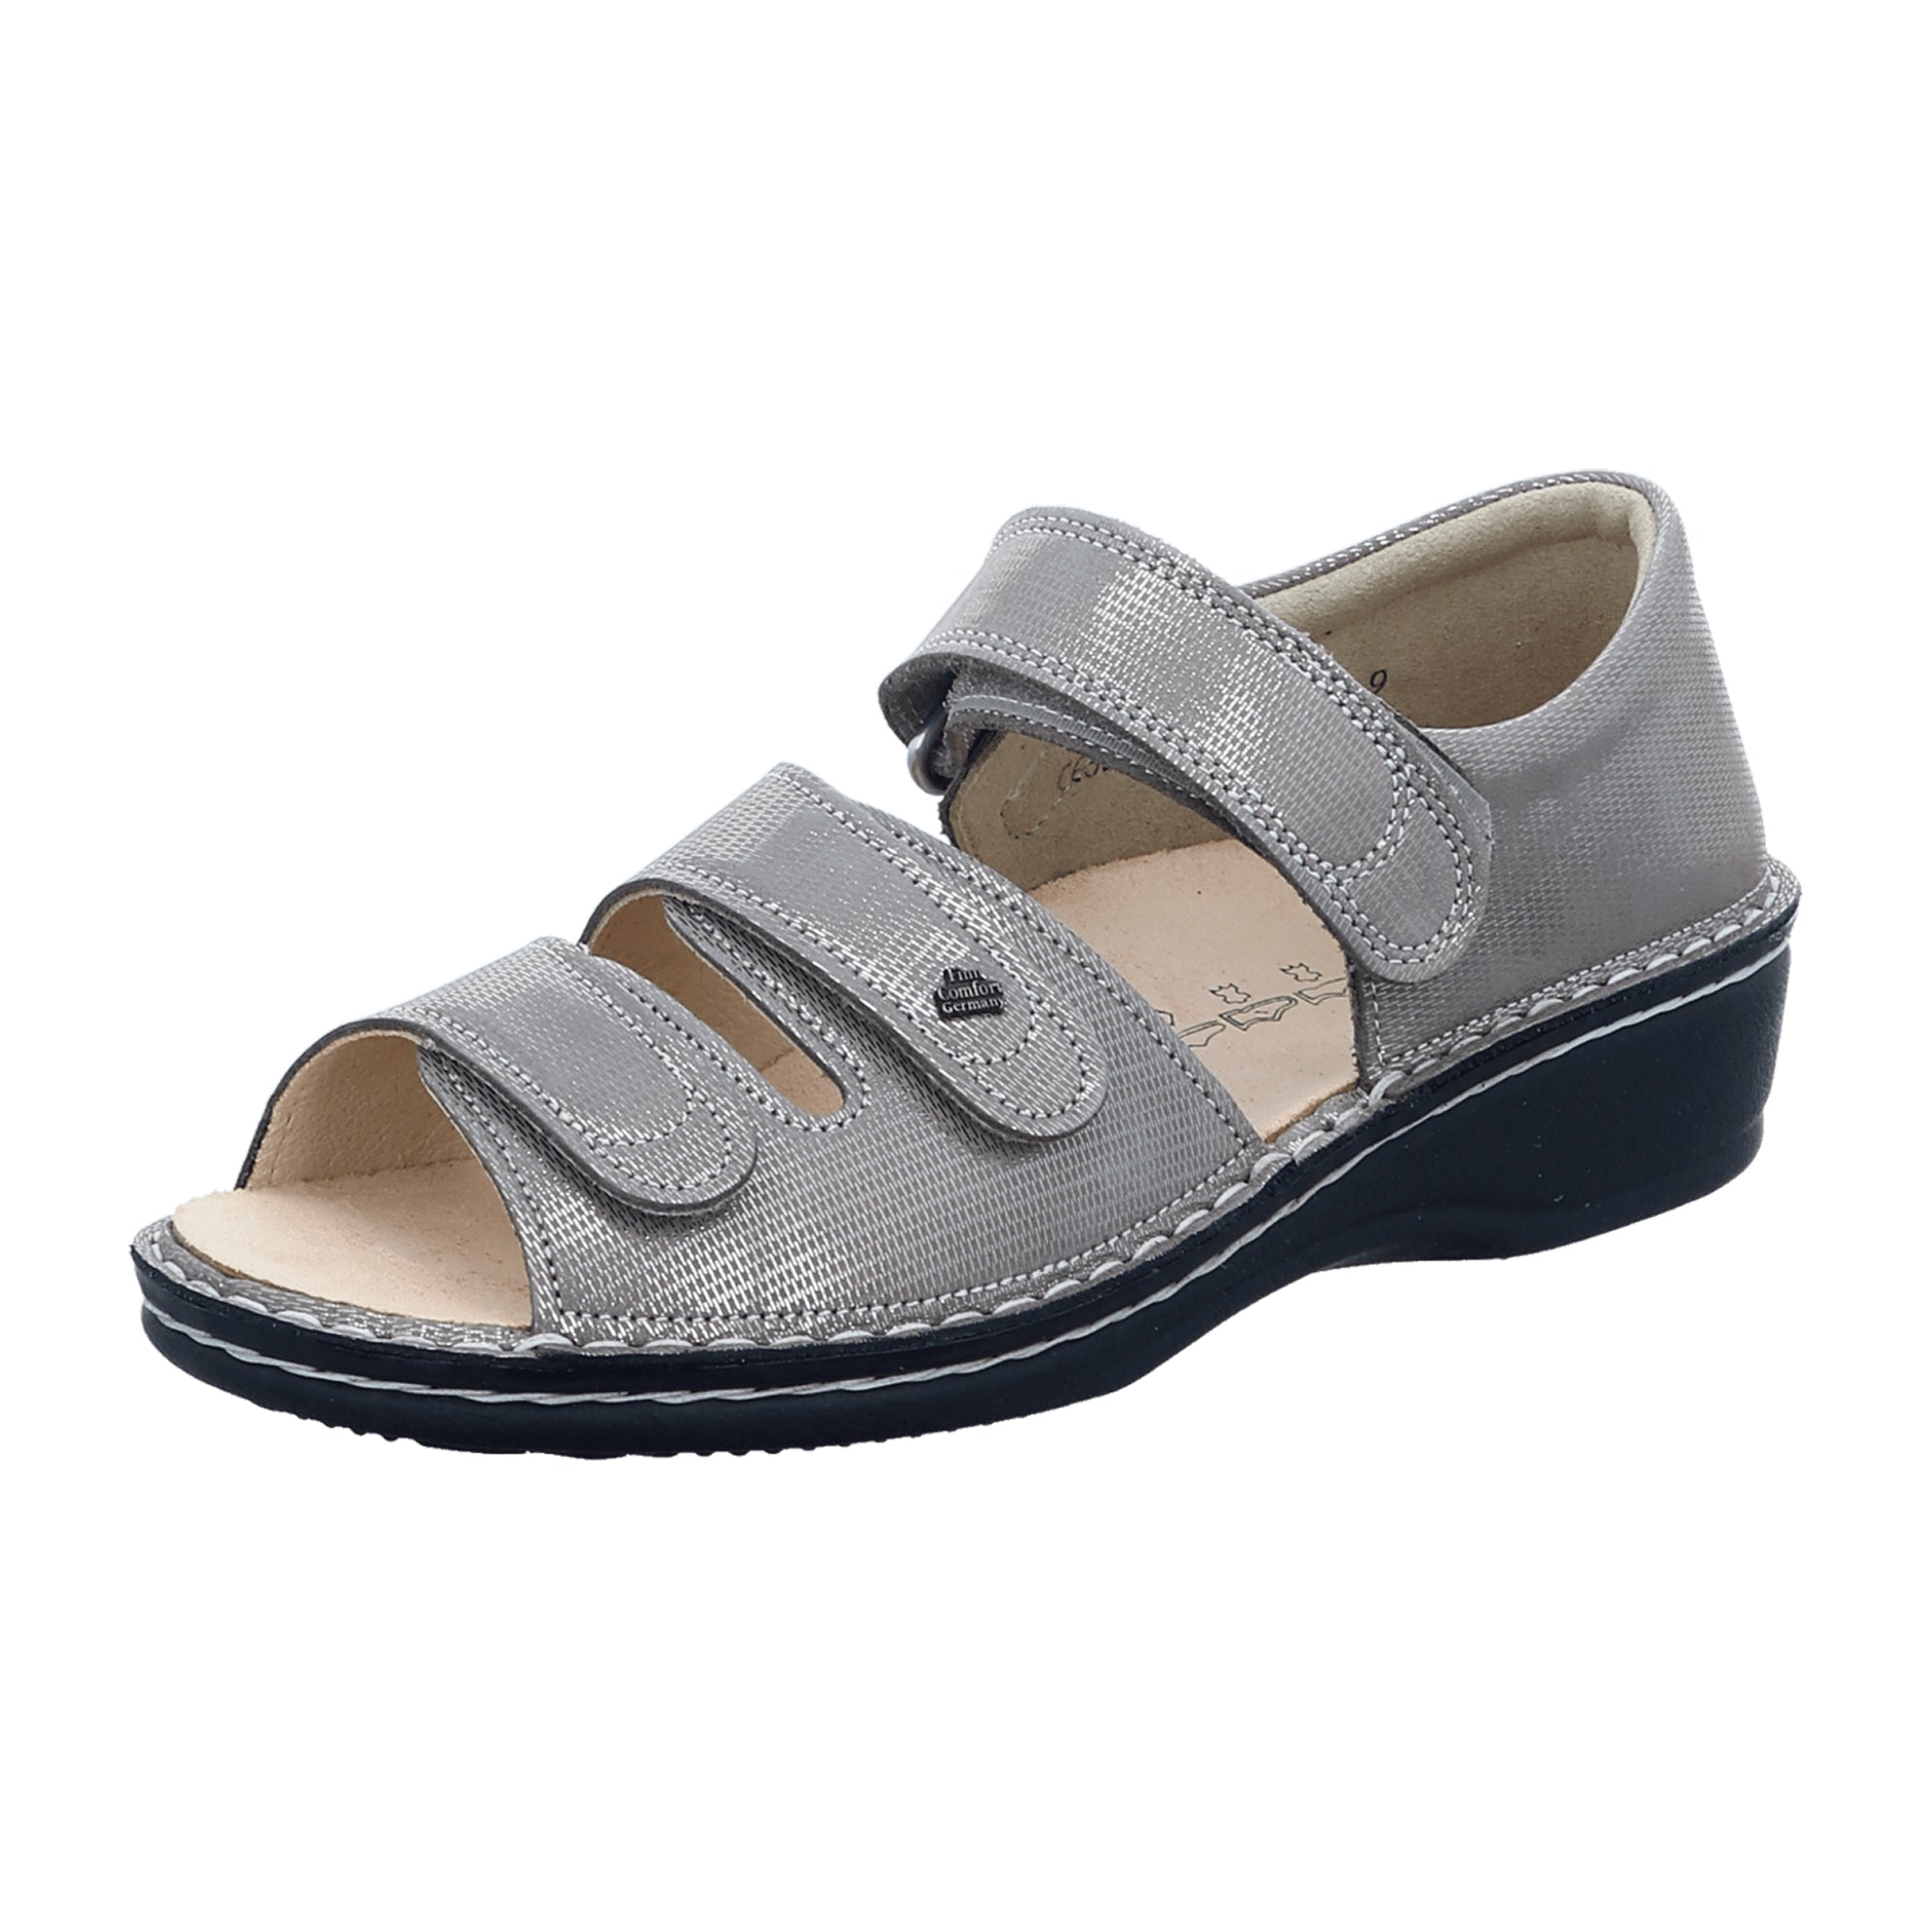 Finn Comfort Usedom Women's Comfort Sandals - Stylish & Durable in Grey